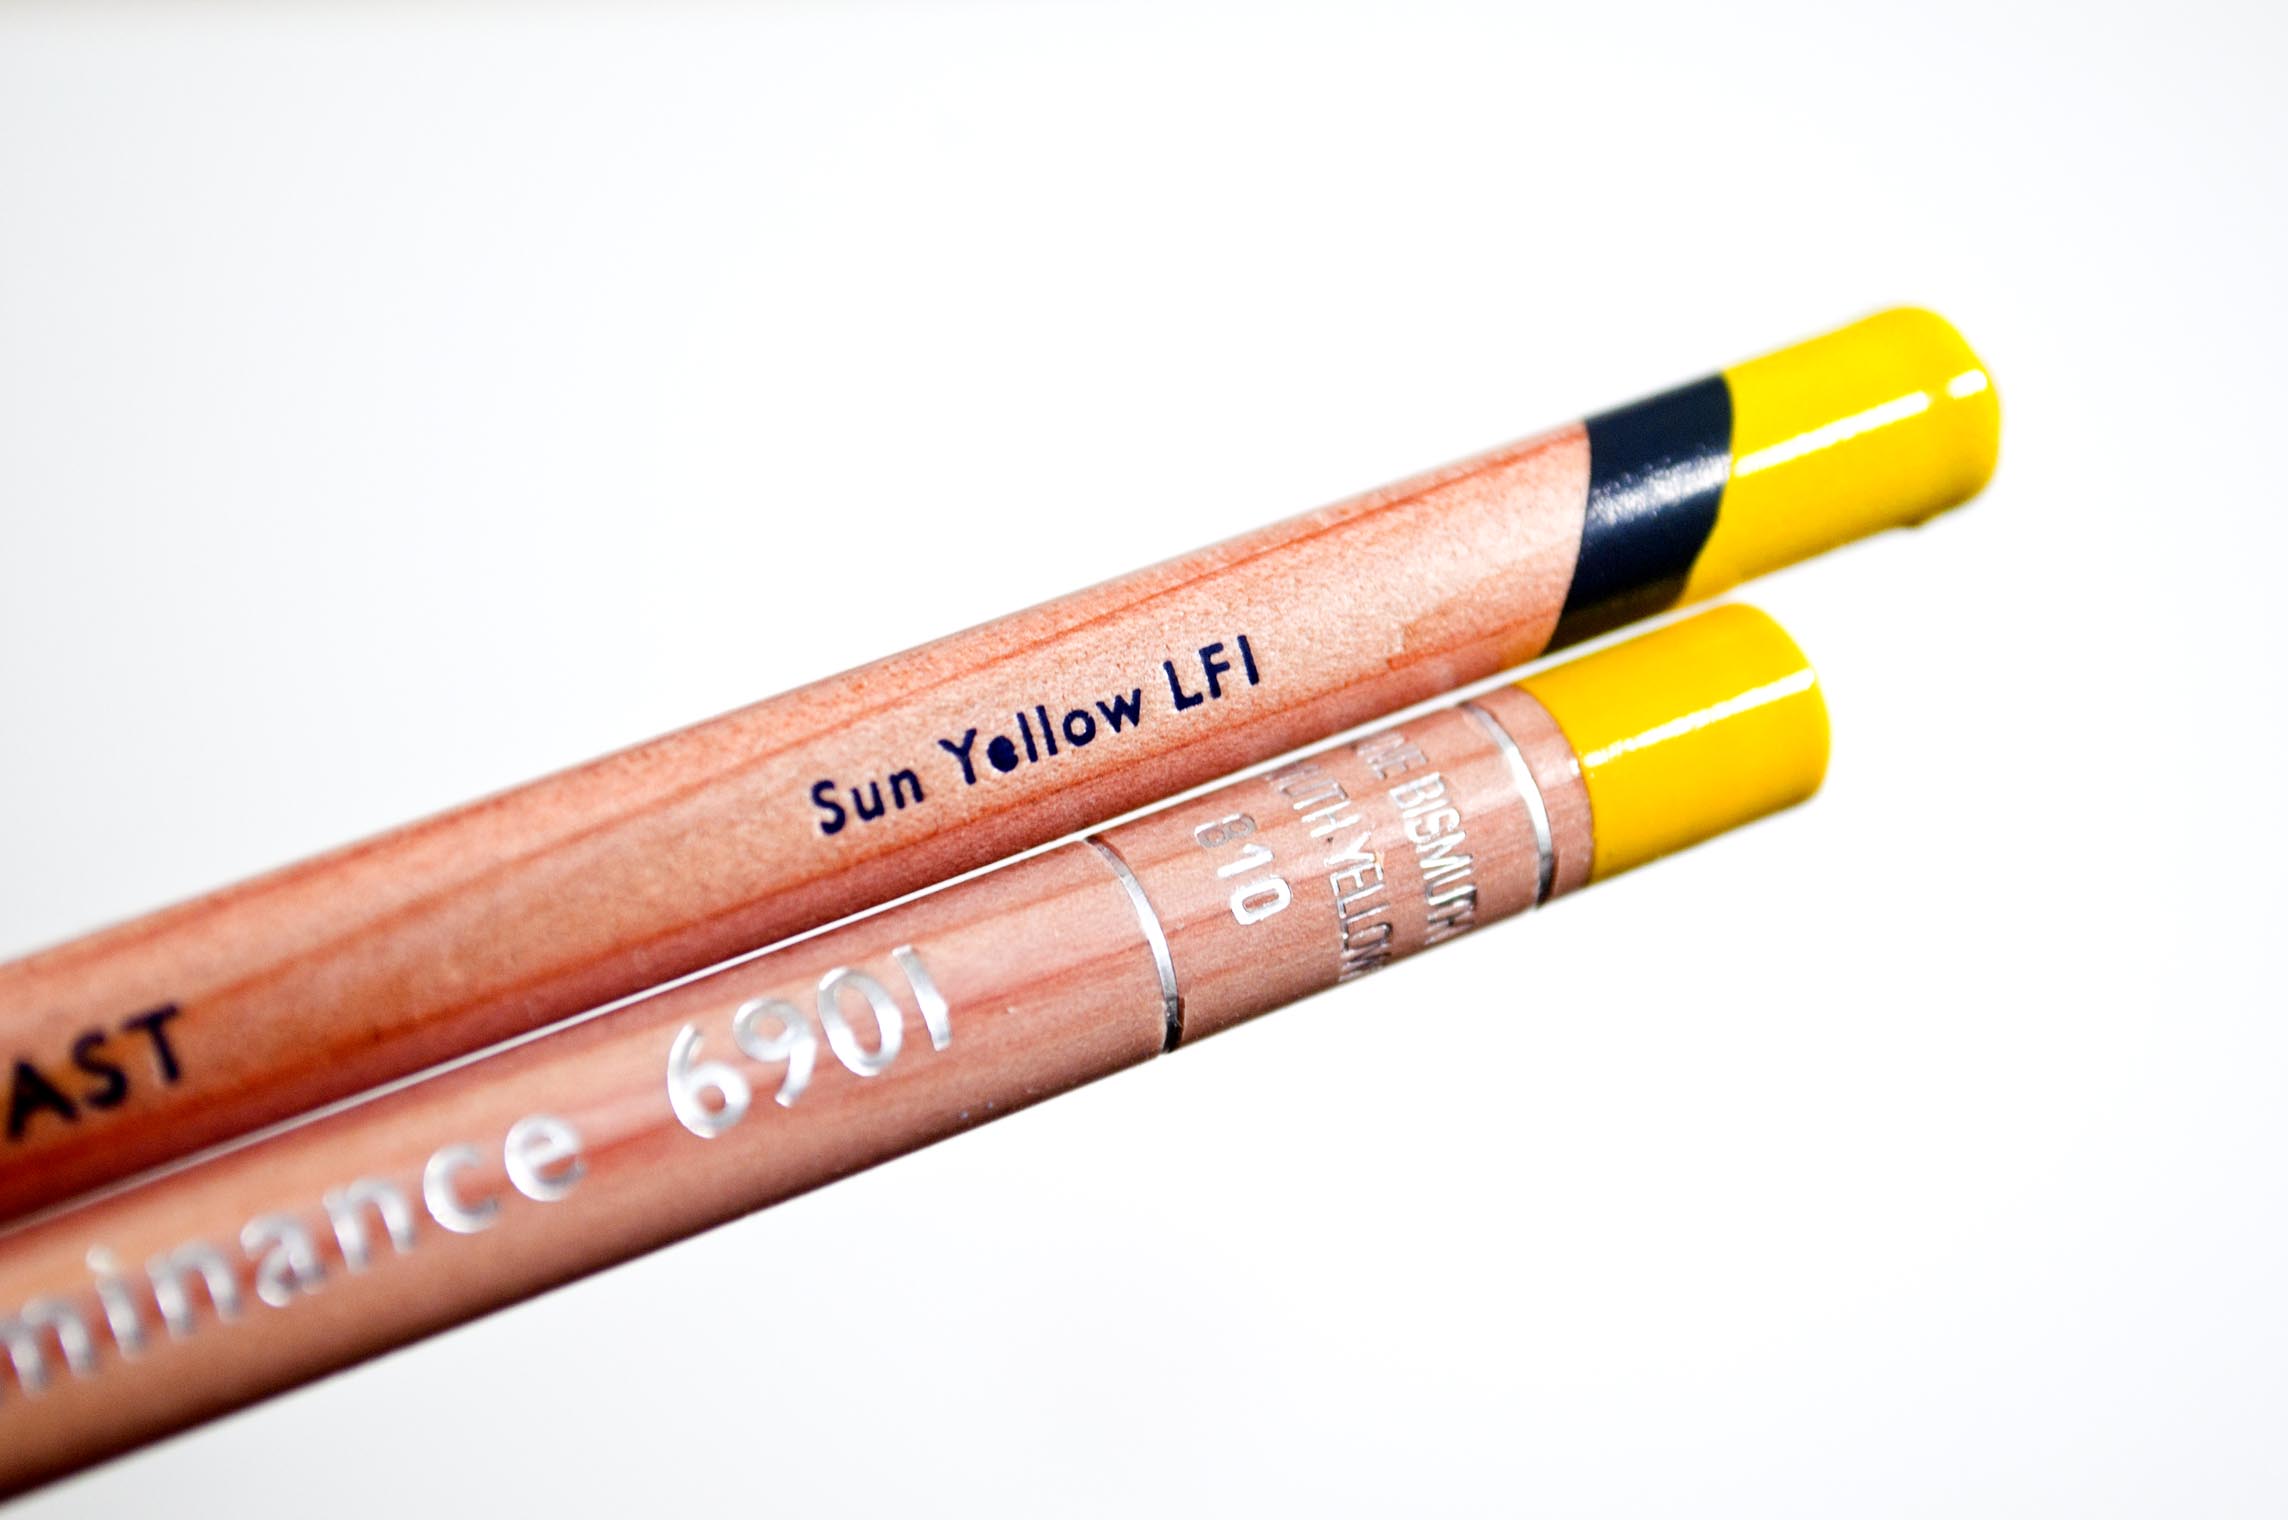 Caran D'Ache Professional Luminance Colored Pencil - Bismuth